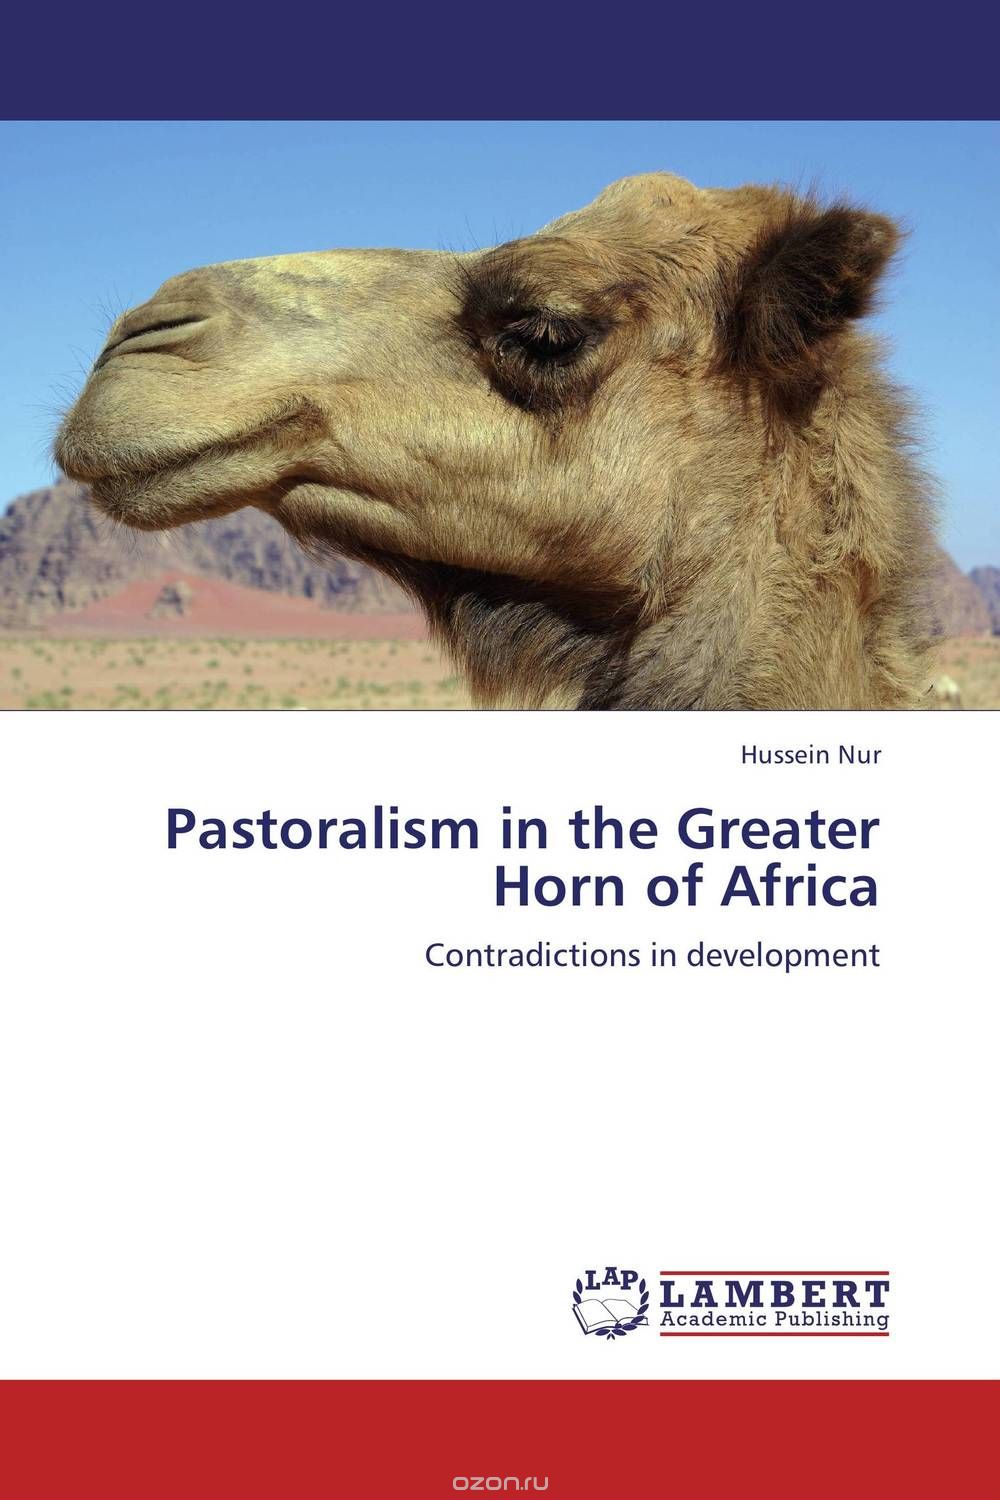 Скачать книгу "Pastoralism in the Greater Horn of Africa"